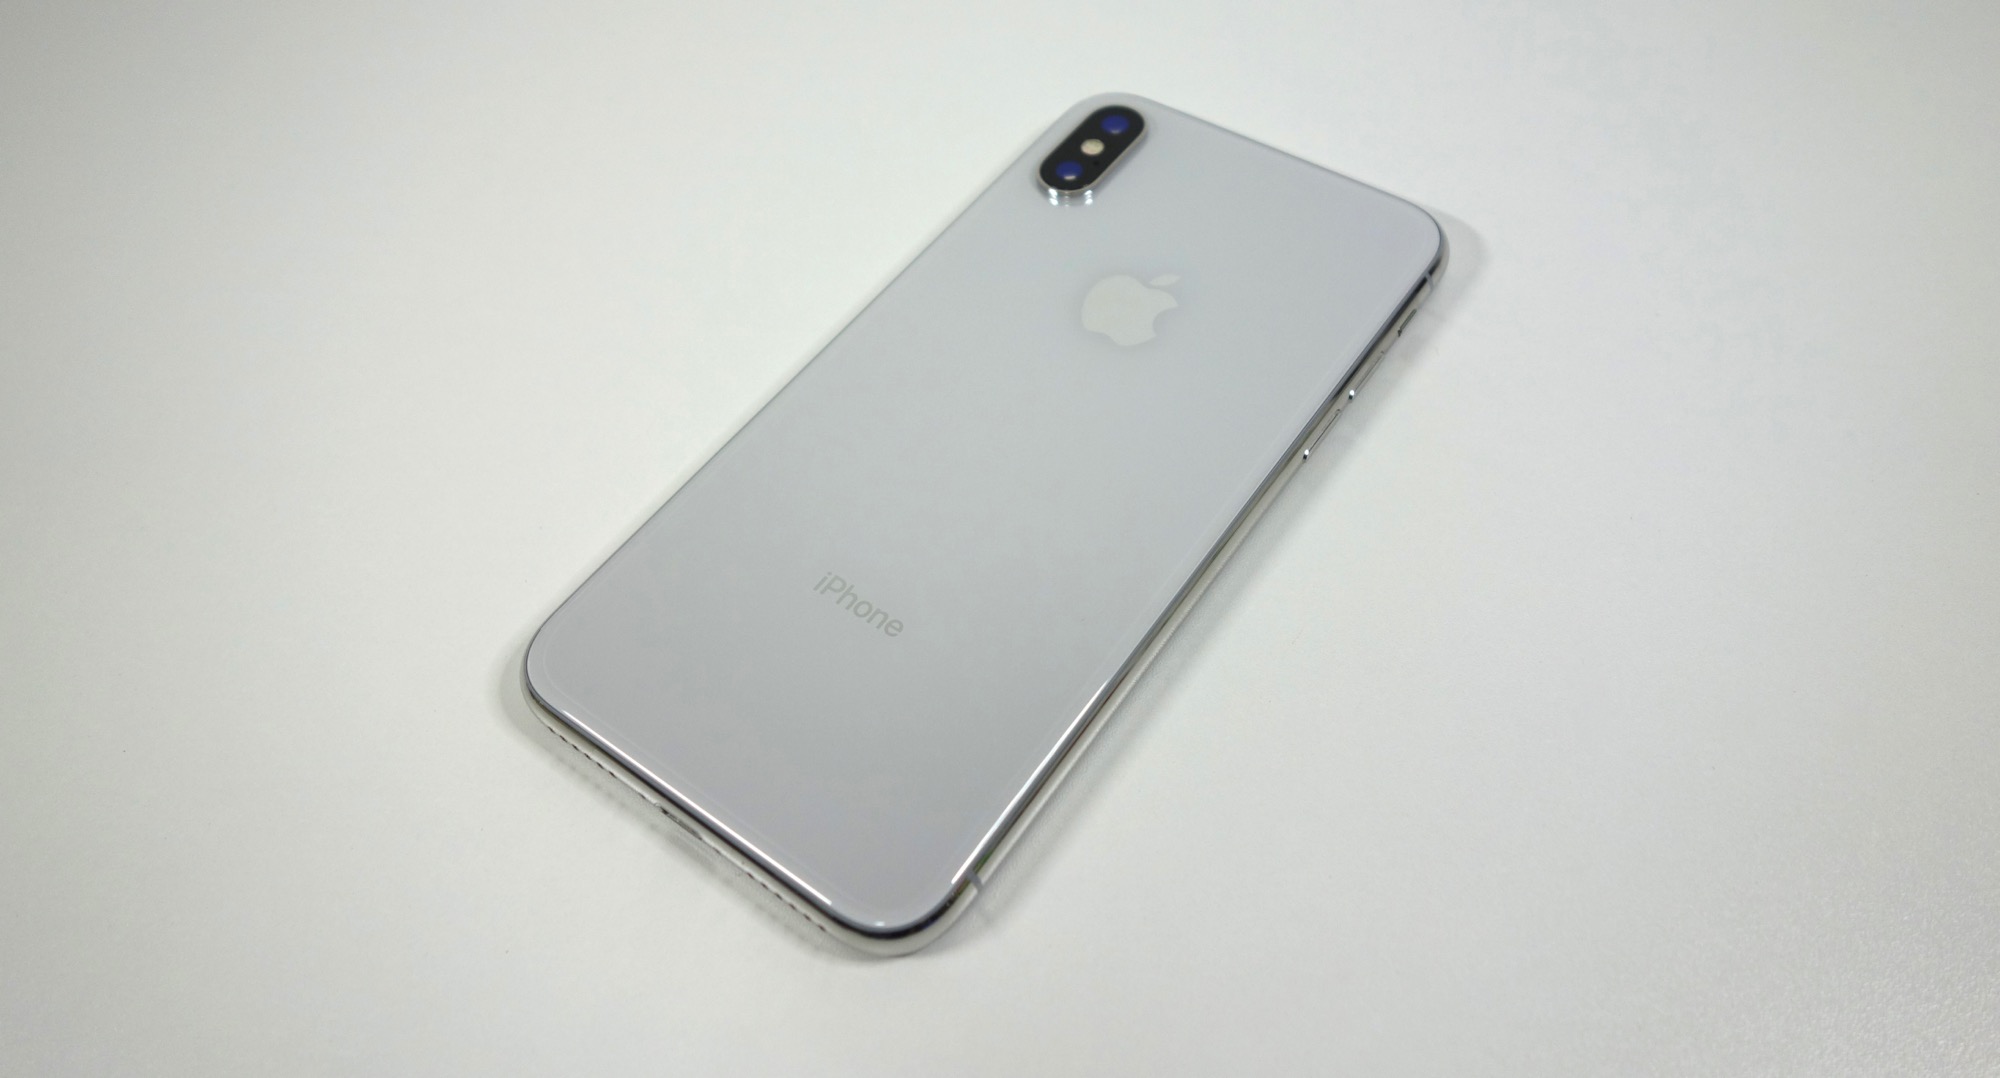 iPhone Xシルバー外観レビュー、iPhone 8と比較して金属部分が光沢質感 